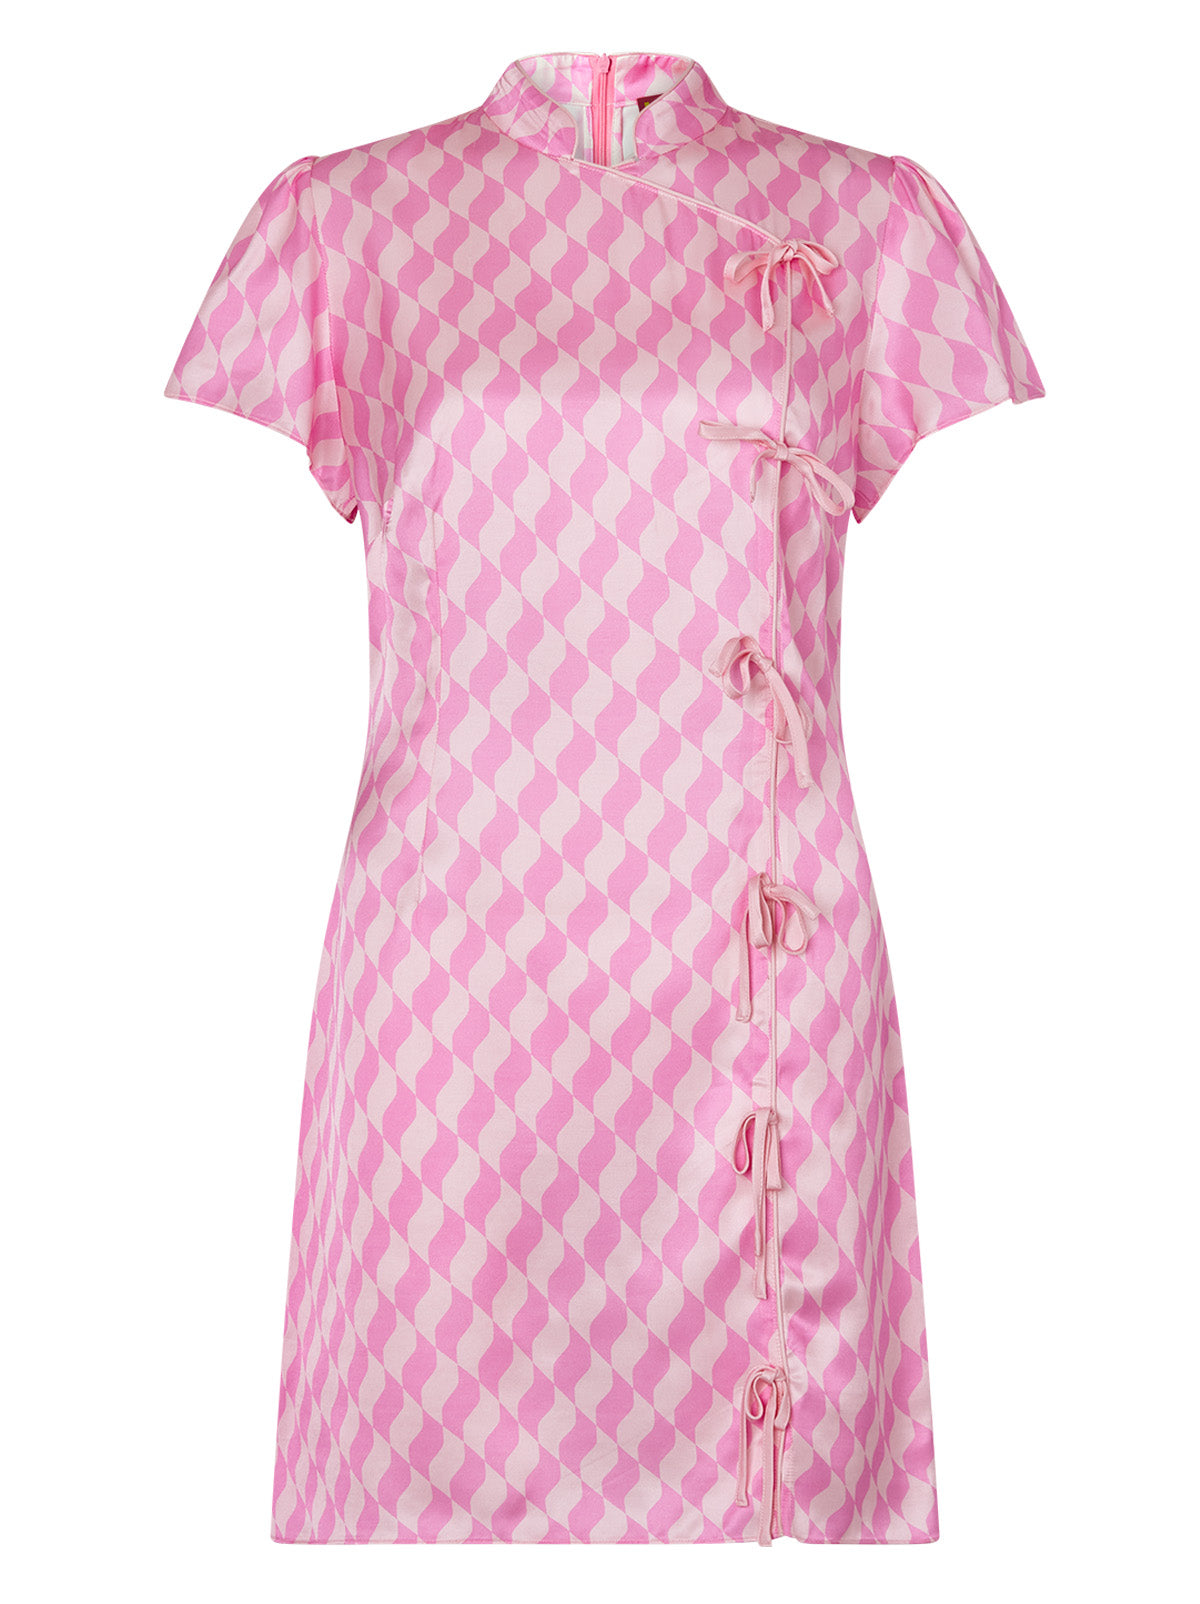 Harlow Pink Wavy Tile Mini Dress by KITRI Studio